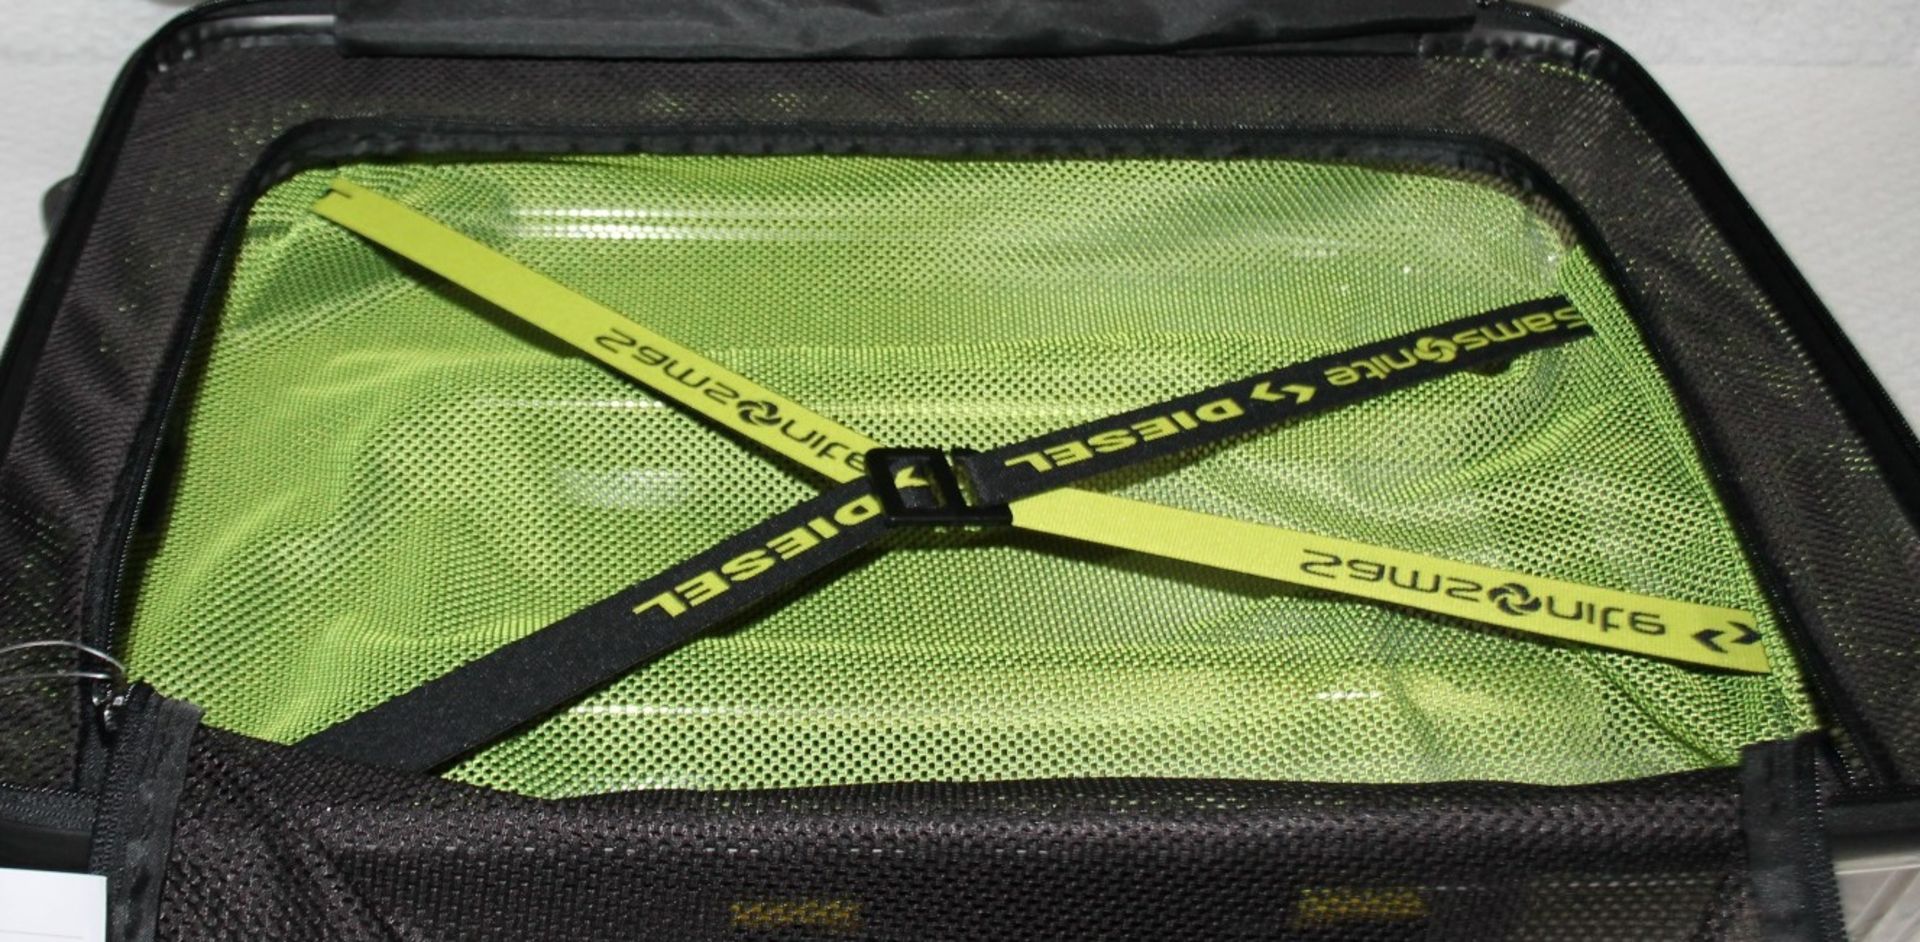 1 x SAMSONITE / DIESEL 'Neopulse' Polycarbonate Spinner Suitcase (55cm) - Ex-Display With Tags - - Image 15 of 17